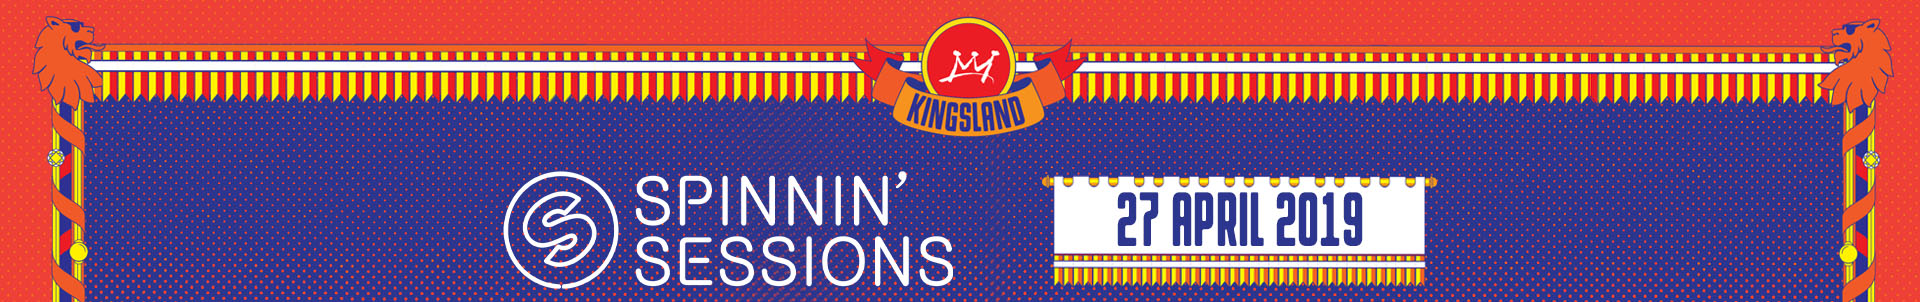 Why you should join Kingsland Festival in Amsterdam or Groningen!